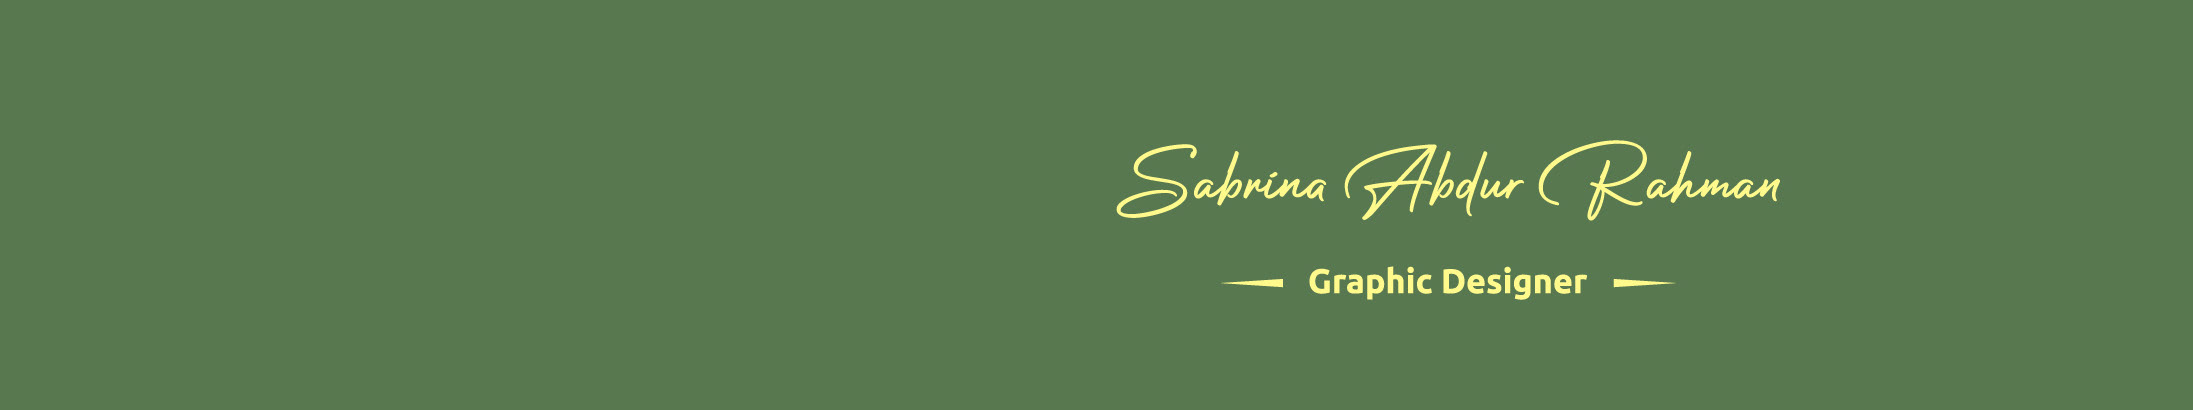 Bannière de profil de Sabrina Abdur Rahman